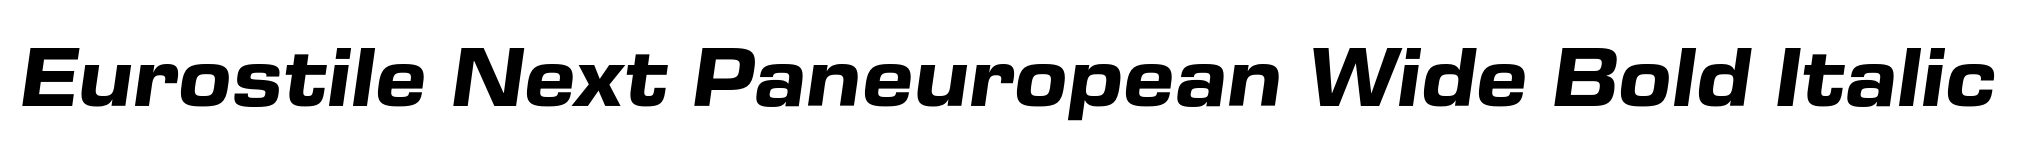 Eurostile Next Paneuropean Wide Bold Italic image